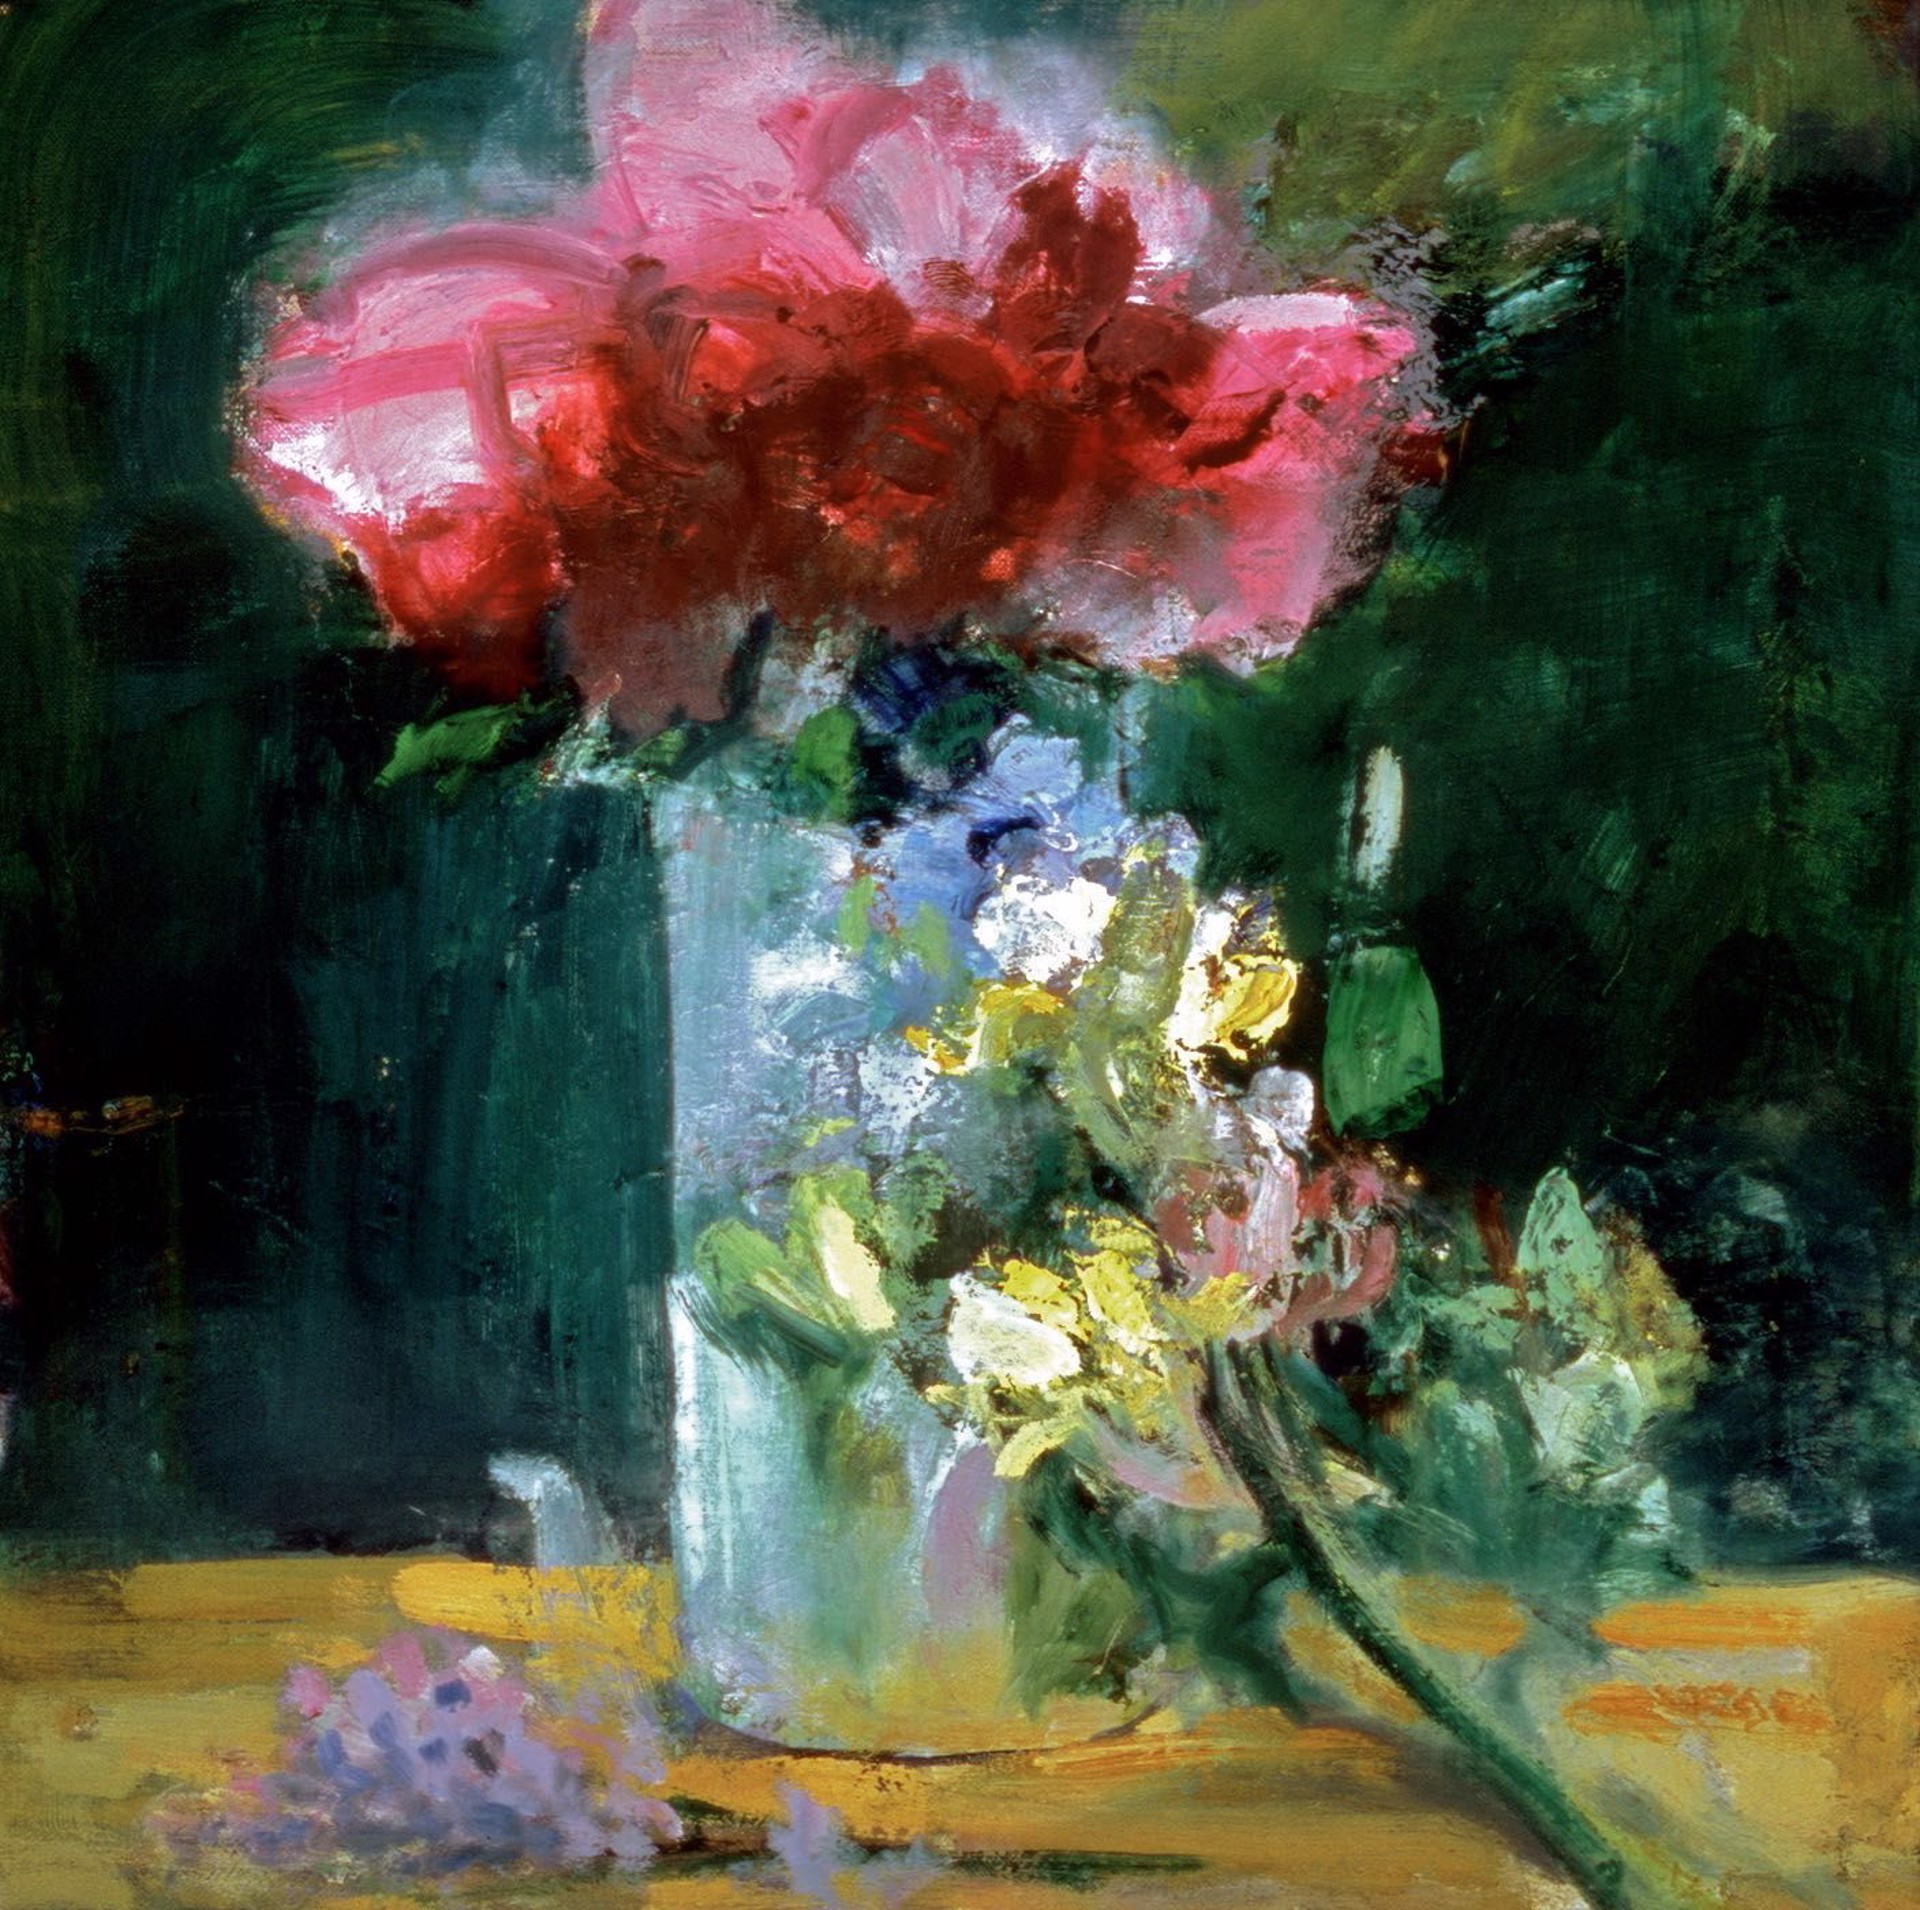 Flowers II (Chardin) by Donald Beal